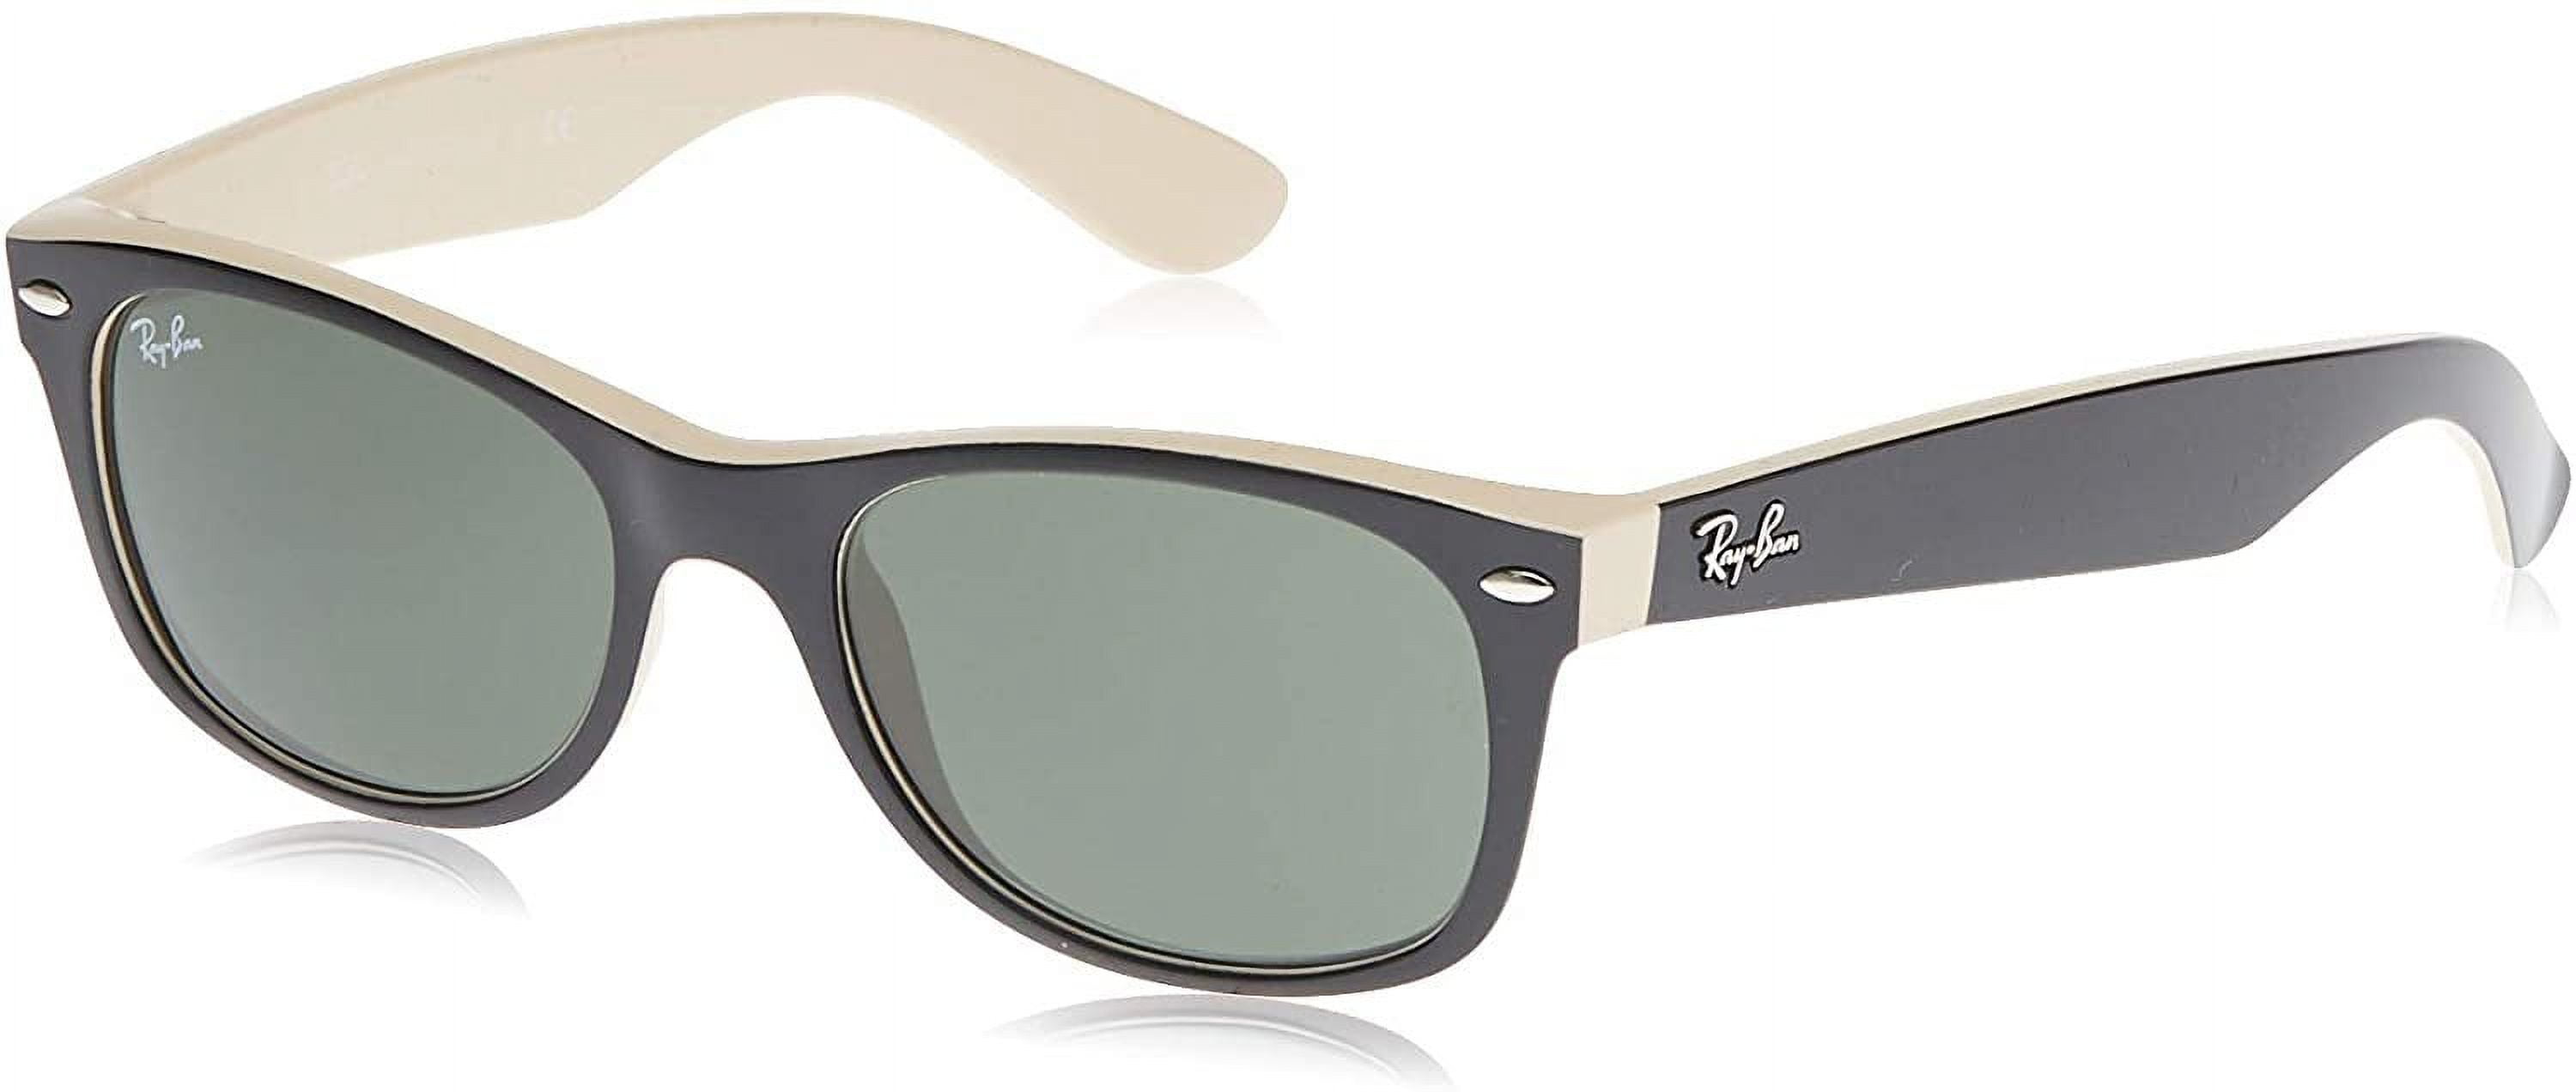 Ray-Ban Matte Black Sunglasses | Glasses.com® | Free Shipping